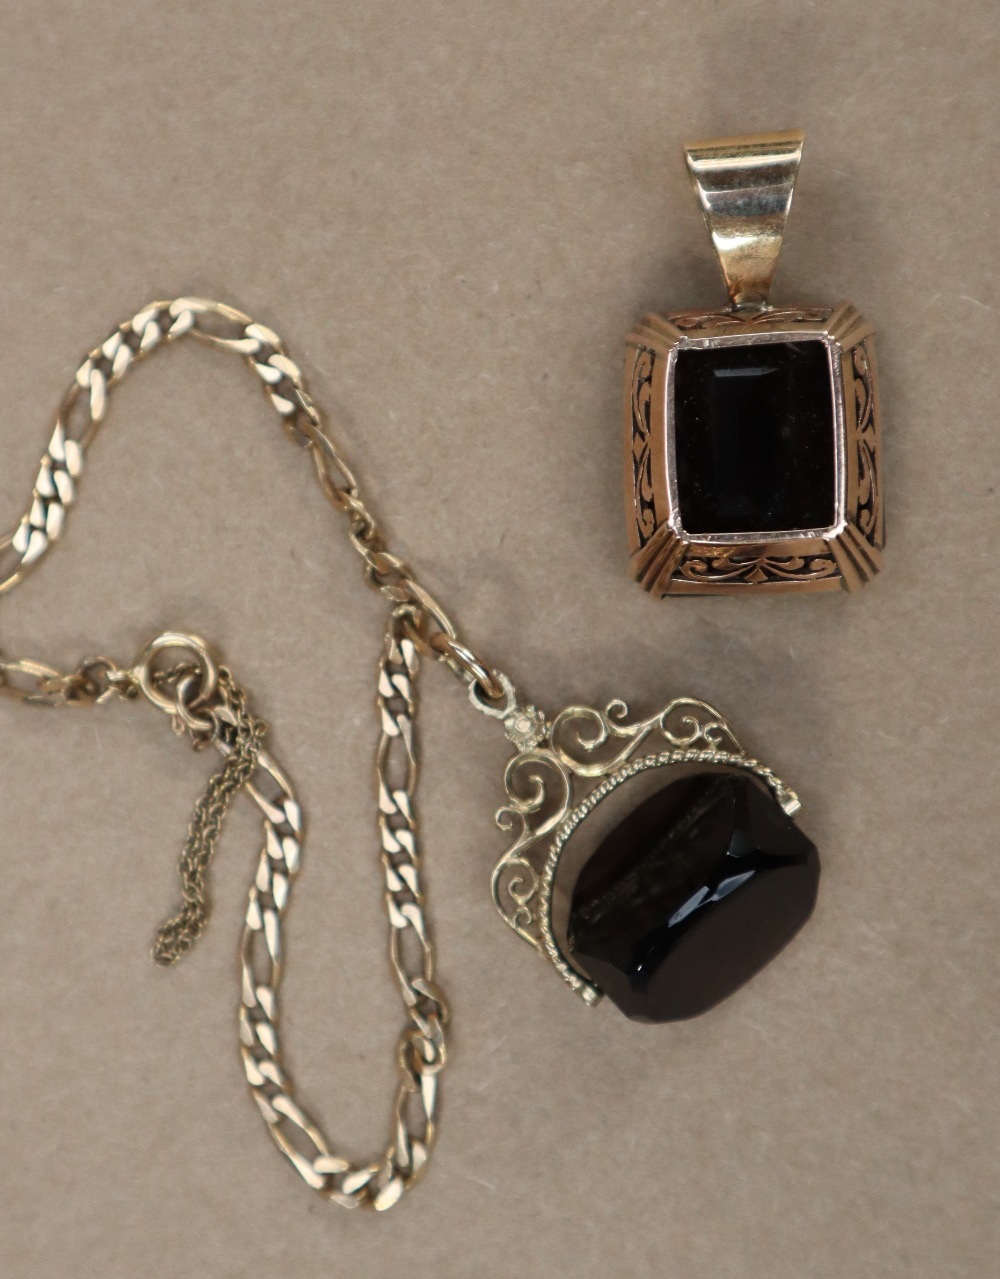 A smokey quartz pendant, set in yellow metal, - Image 5 of 5